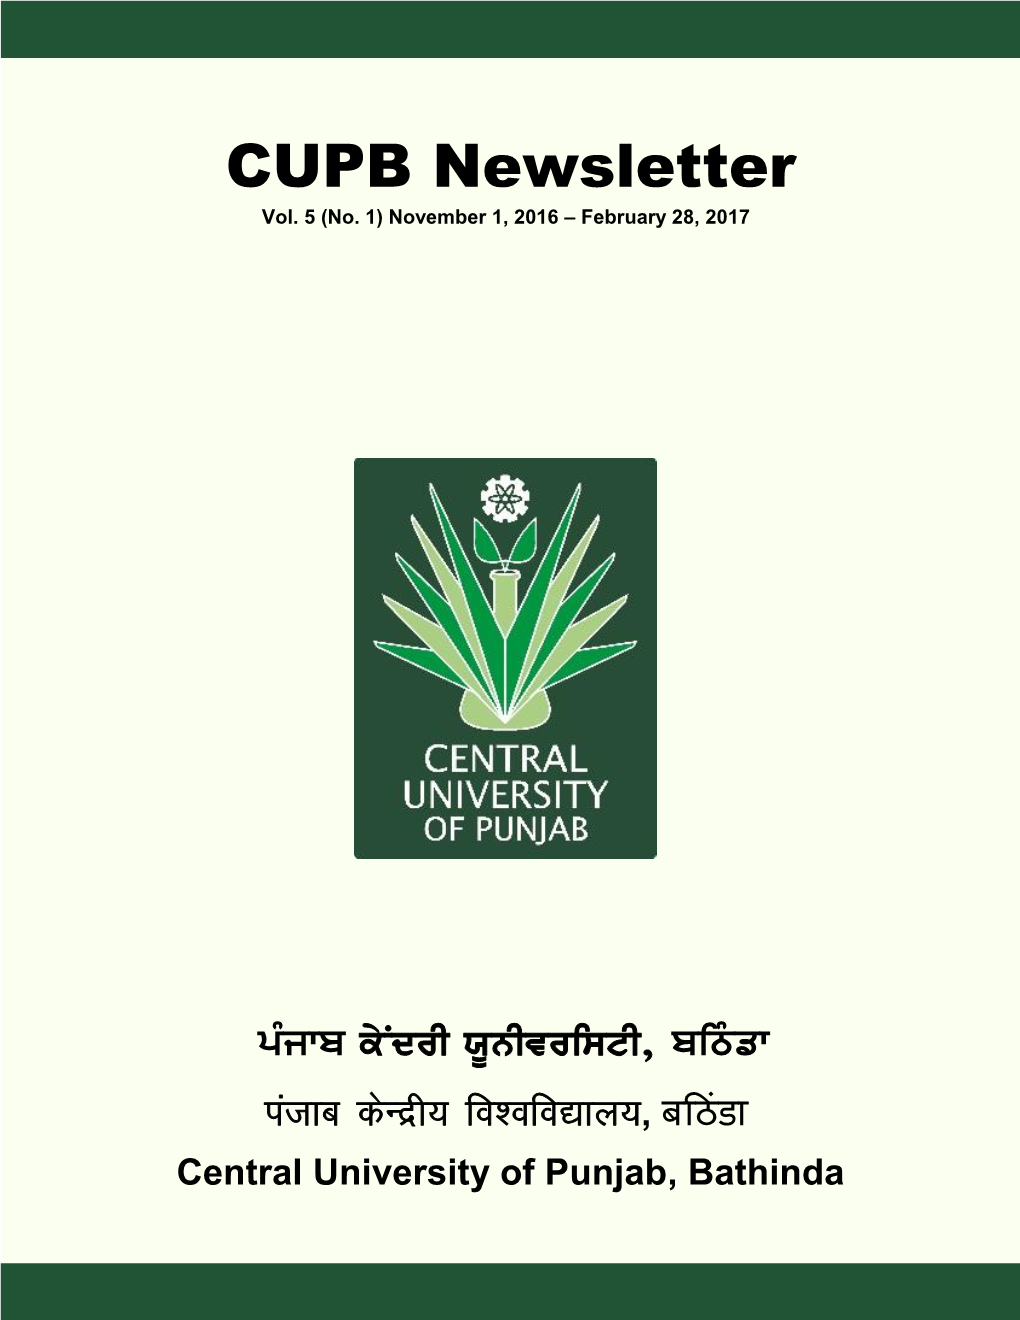 CUPB Newsletter Vol